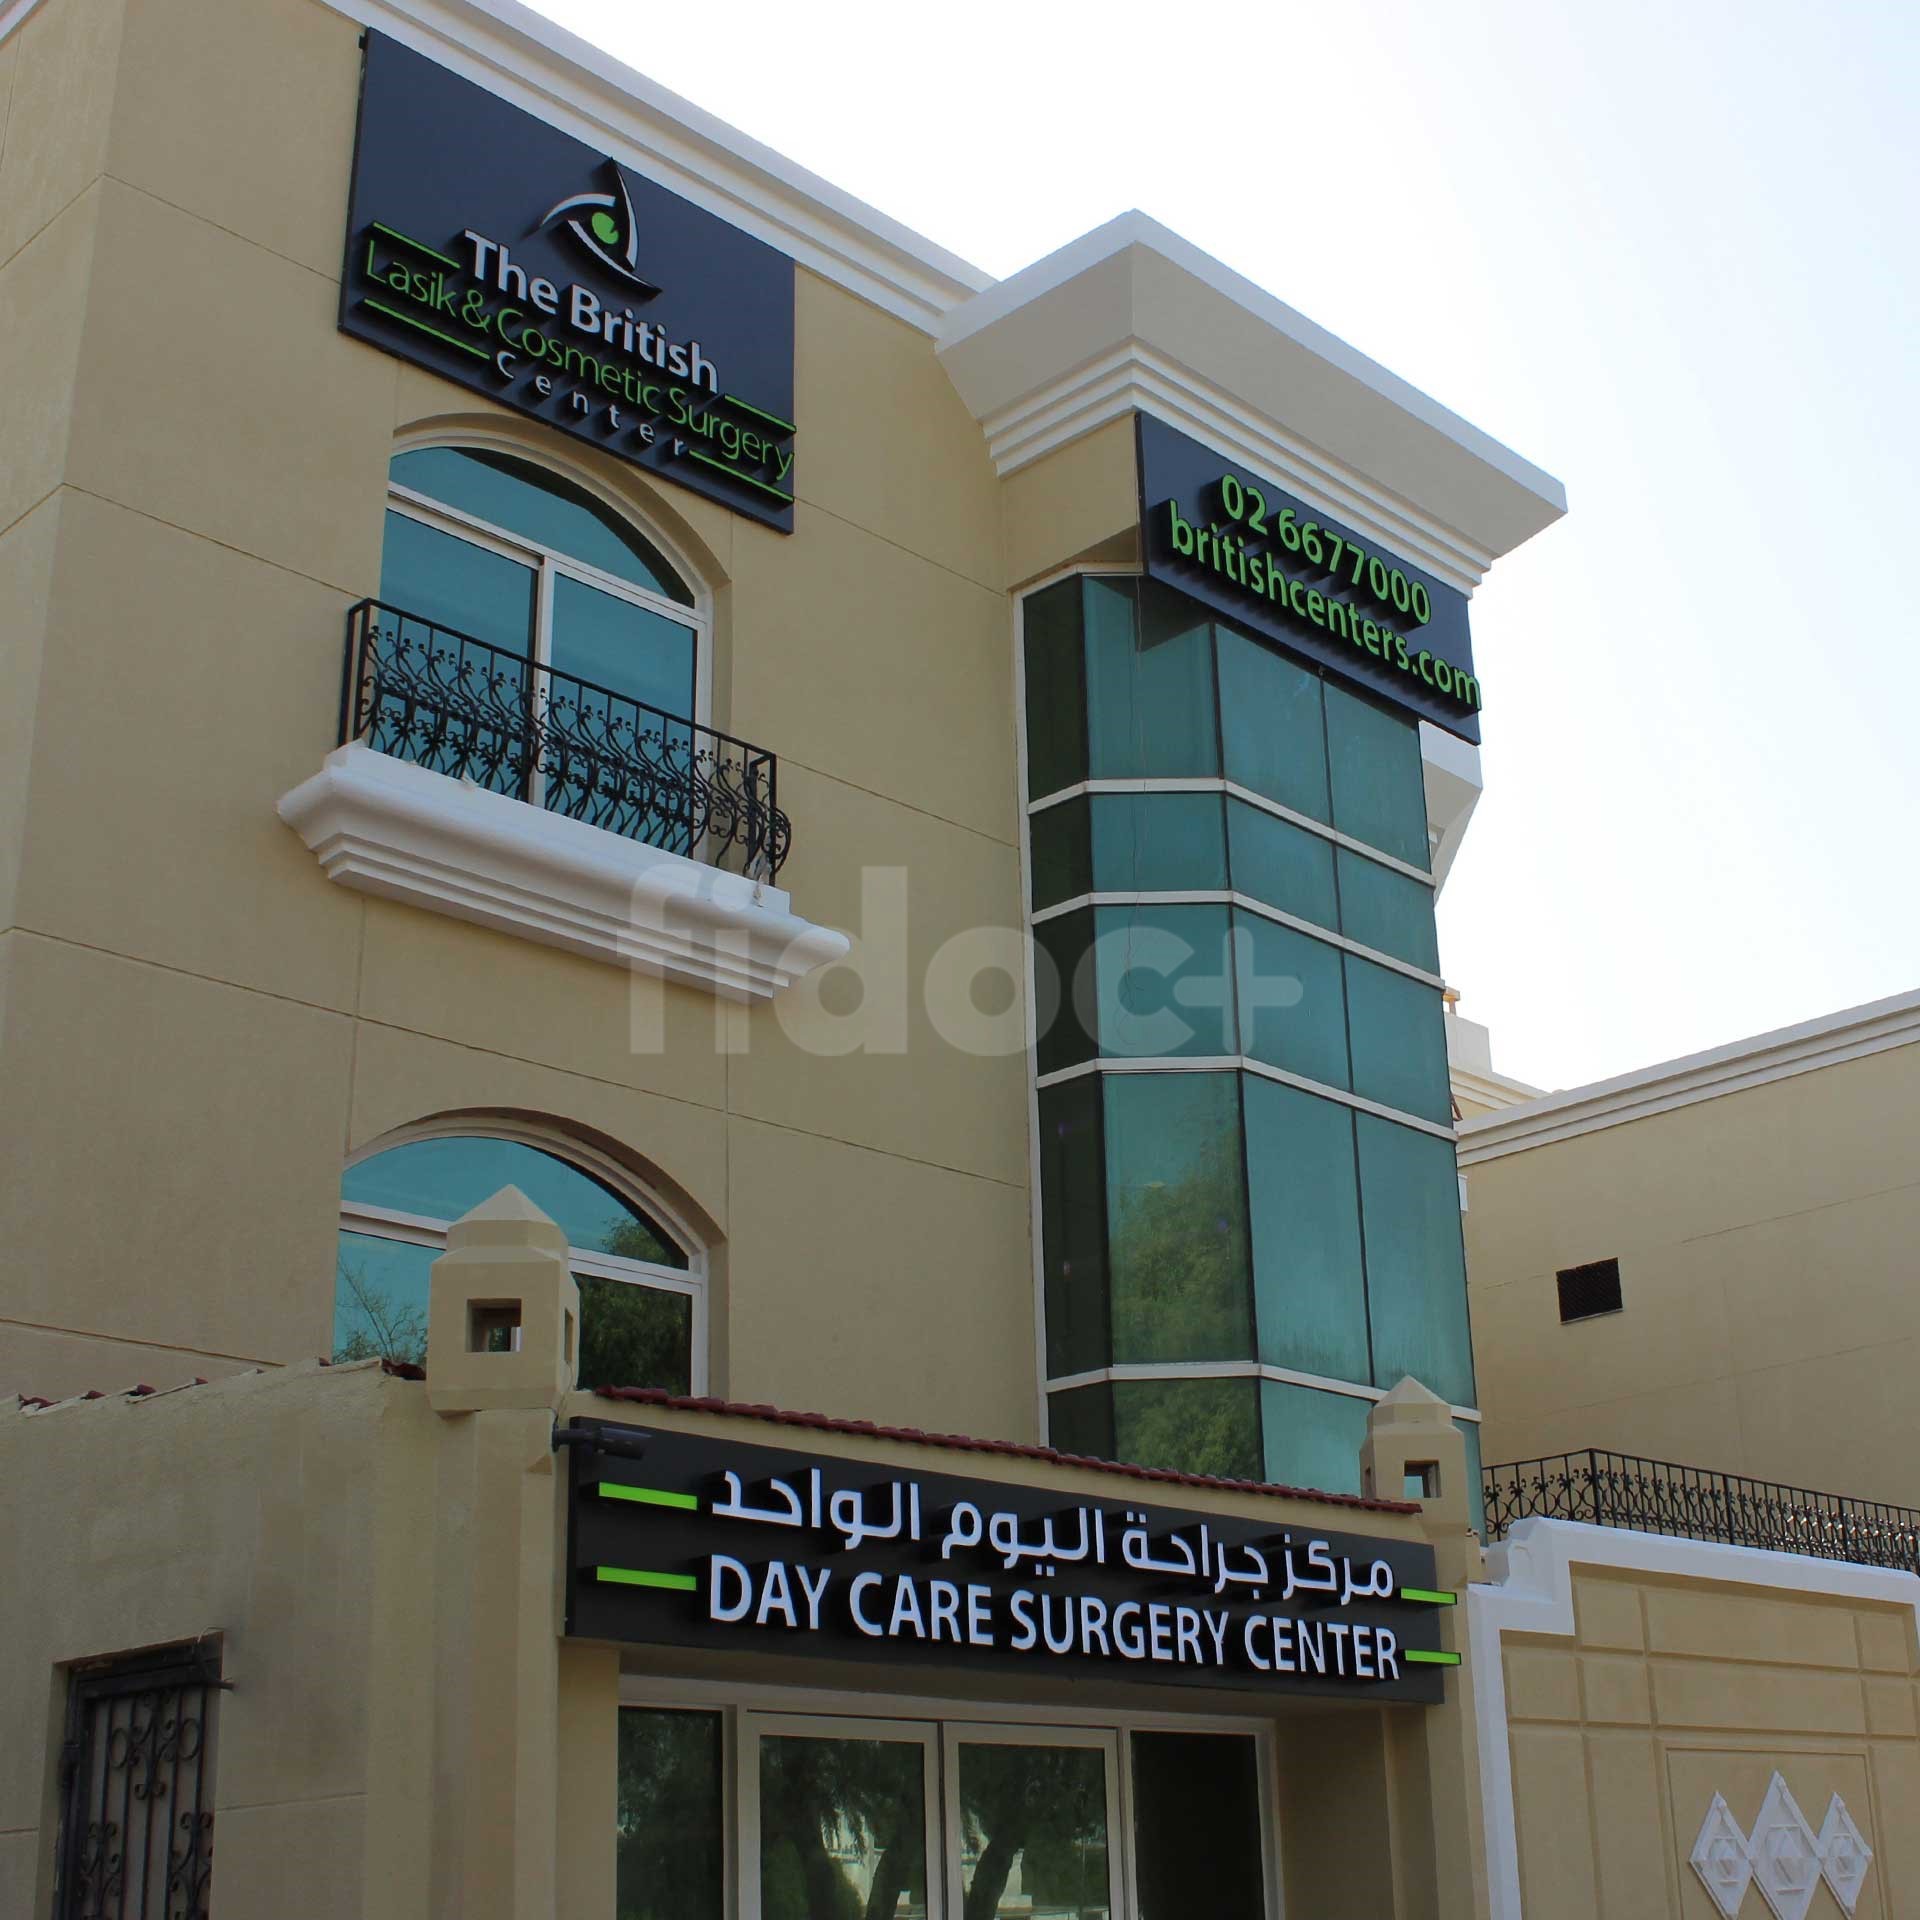 The British Lasik & Cosmetic Surgery Center, Dubai